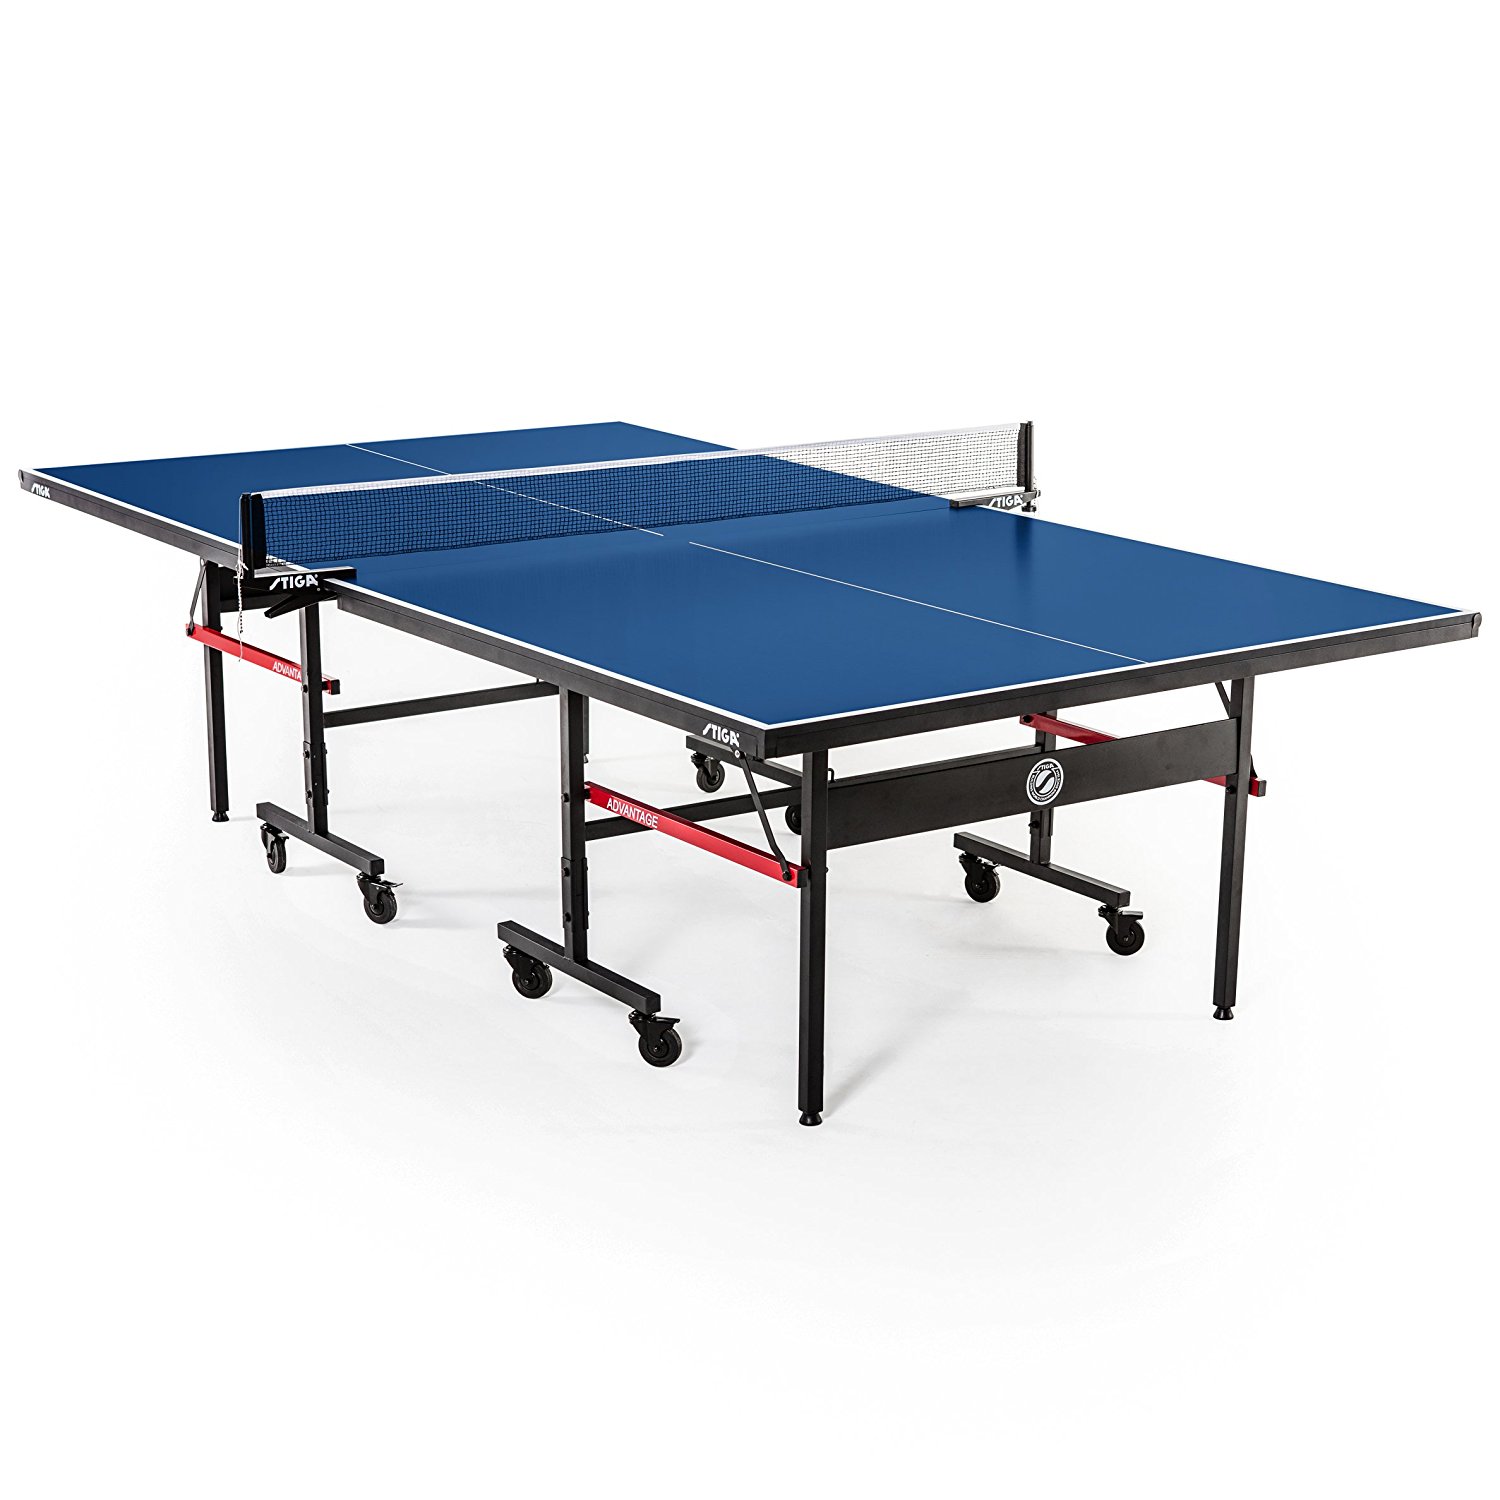 Amazon.com : STIGA Advantage Indoor Table Tennis Table : Sports ...